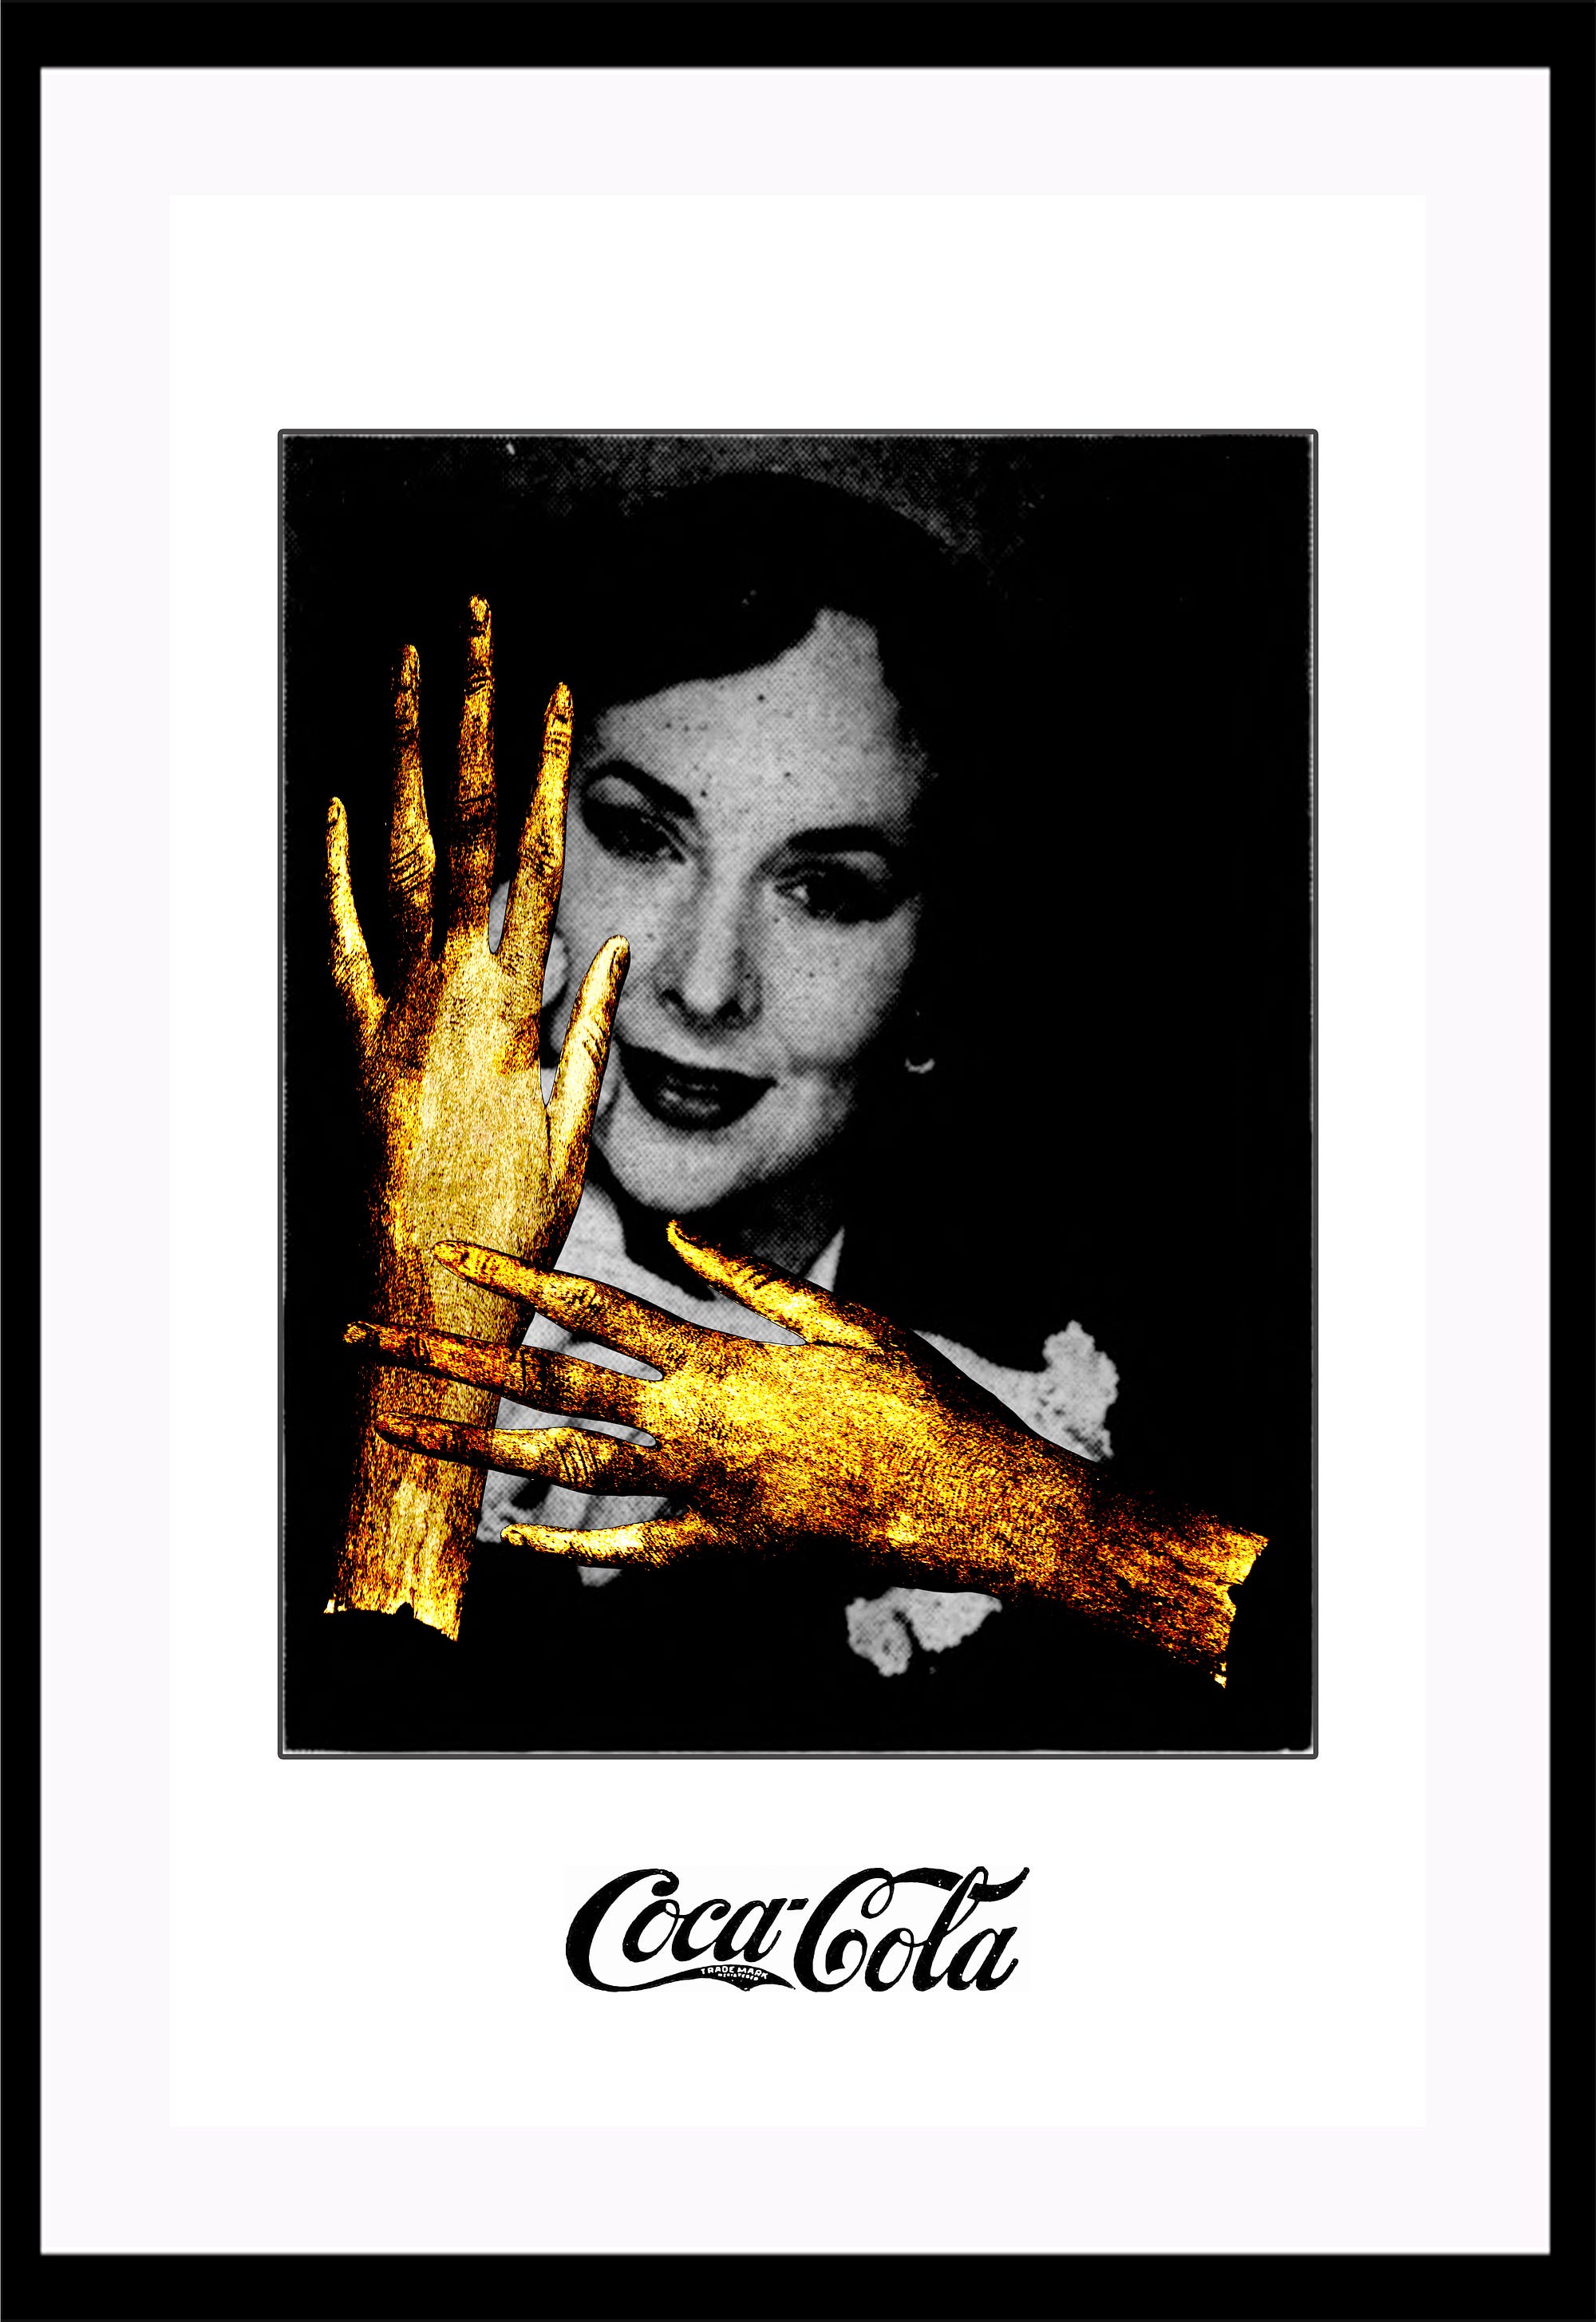 Coca-cola artwork by Jakob Zaaiman